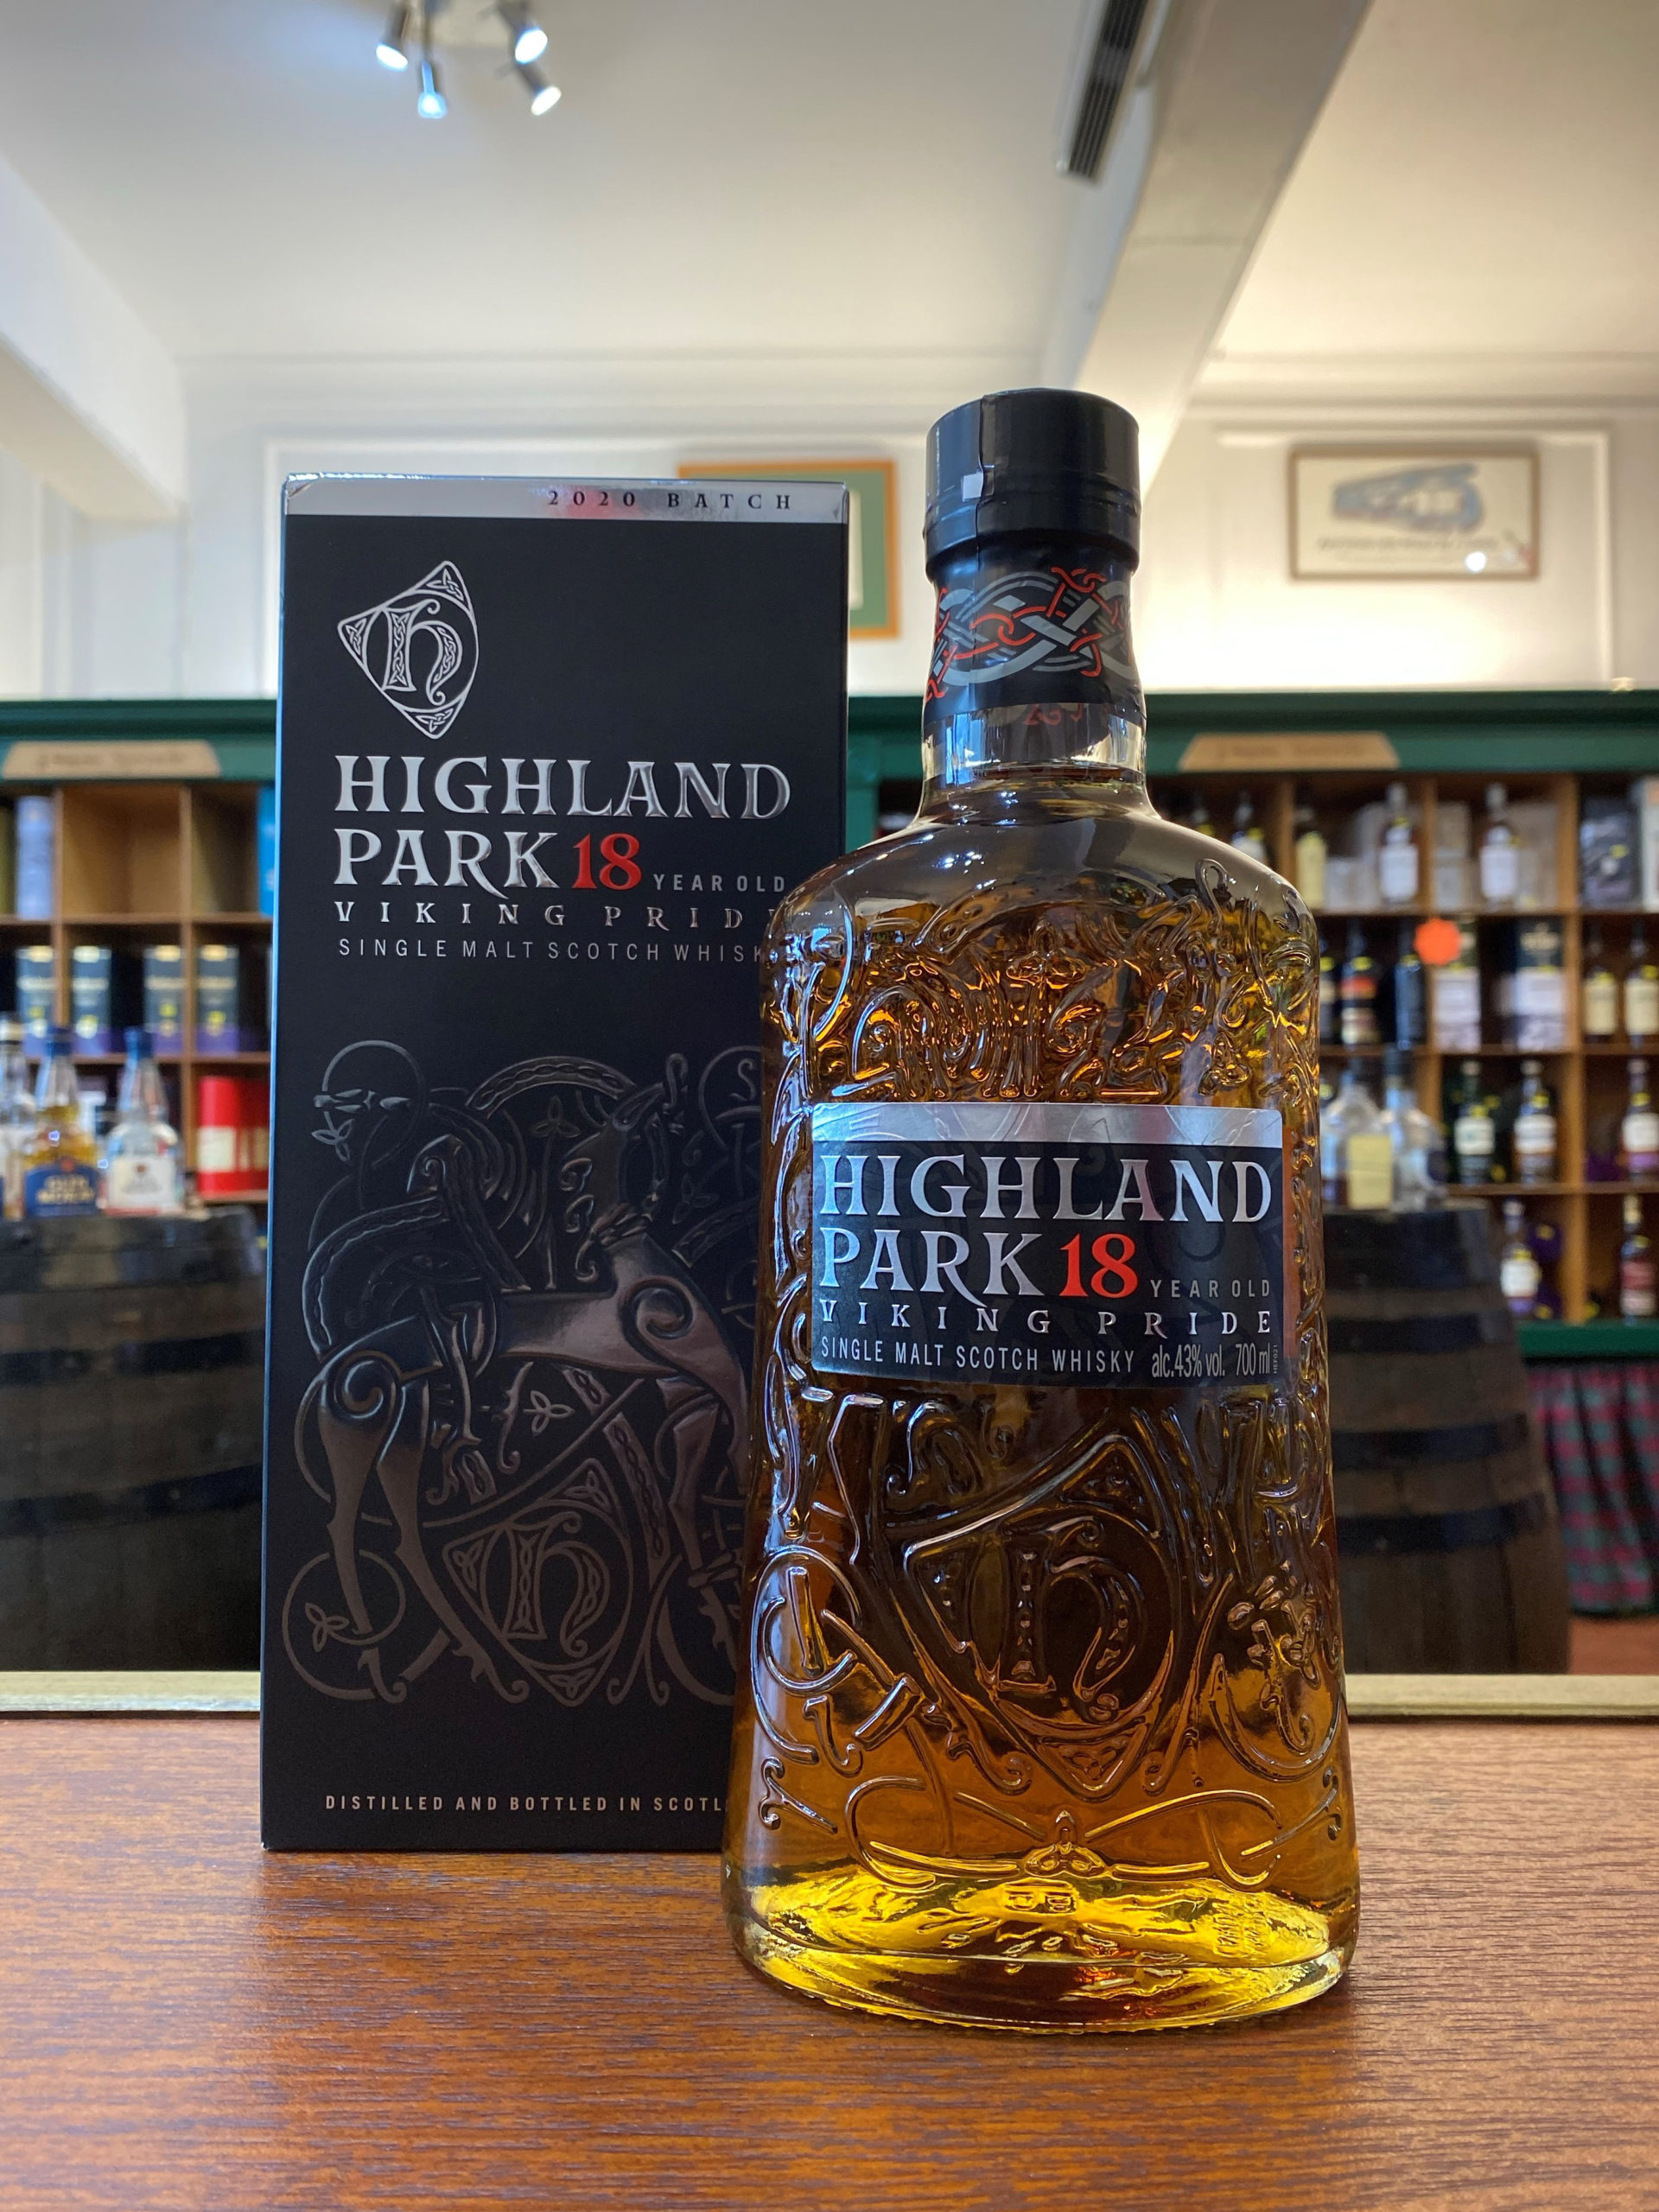 Highland Park 18 Years Old Viking Pride 2020 Batch Single Malt Scotch Whisky 70cl The Whisky